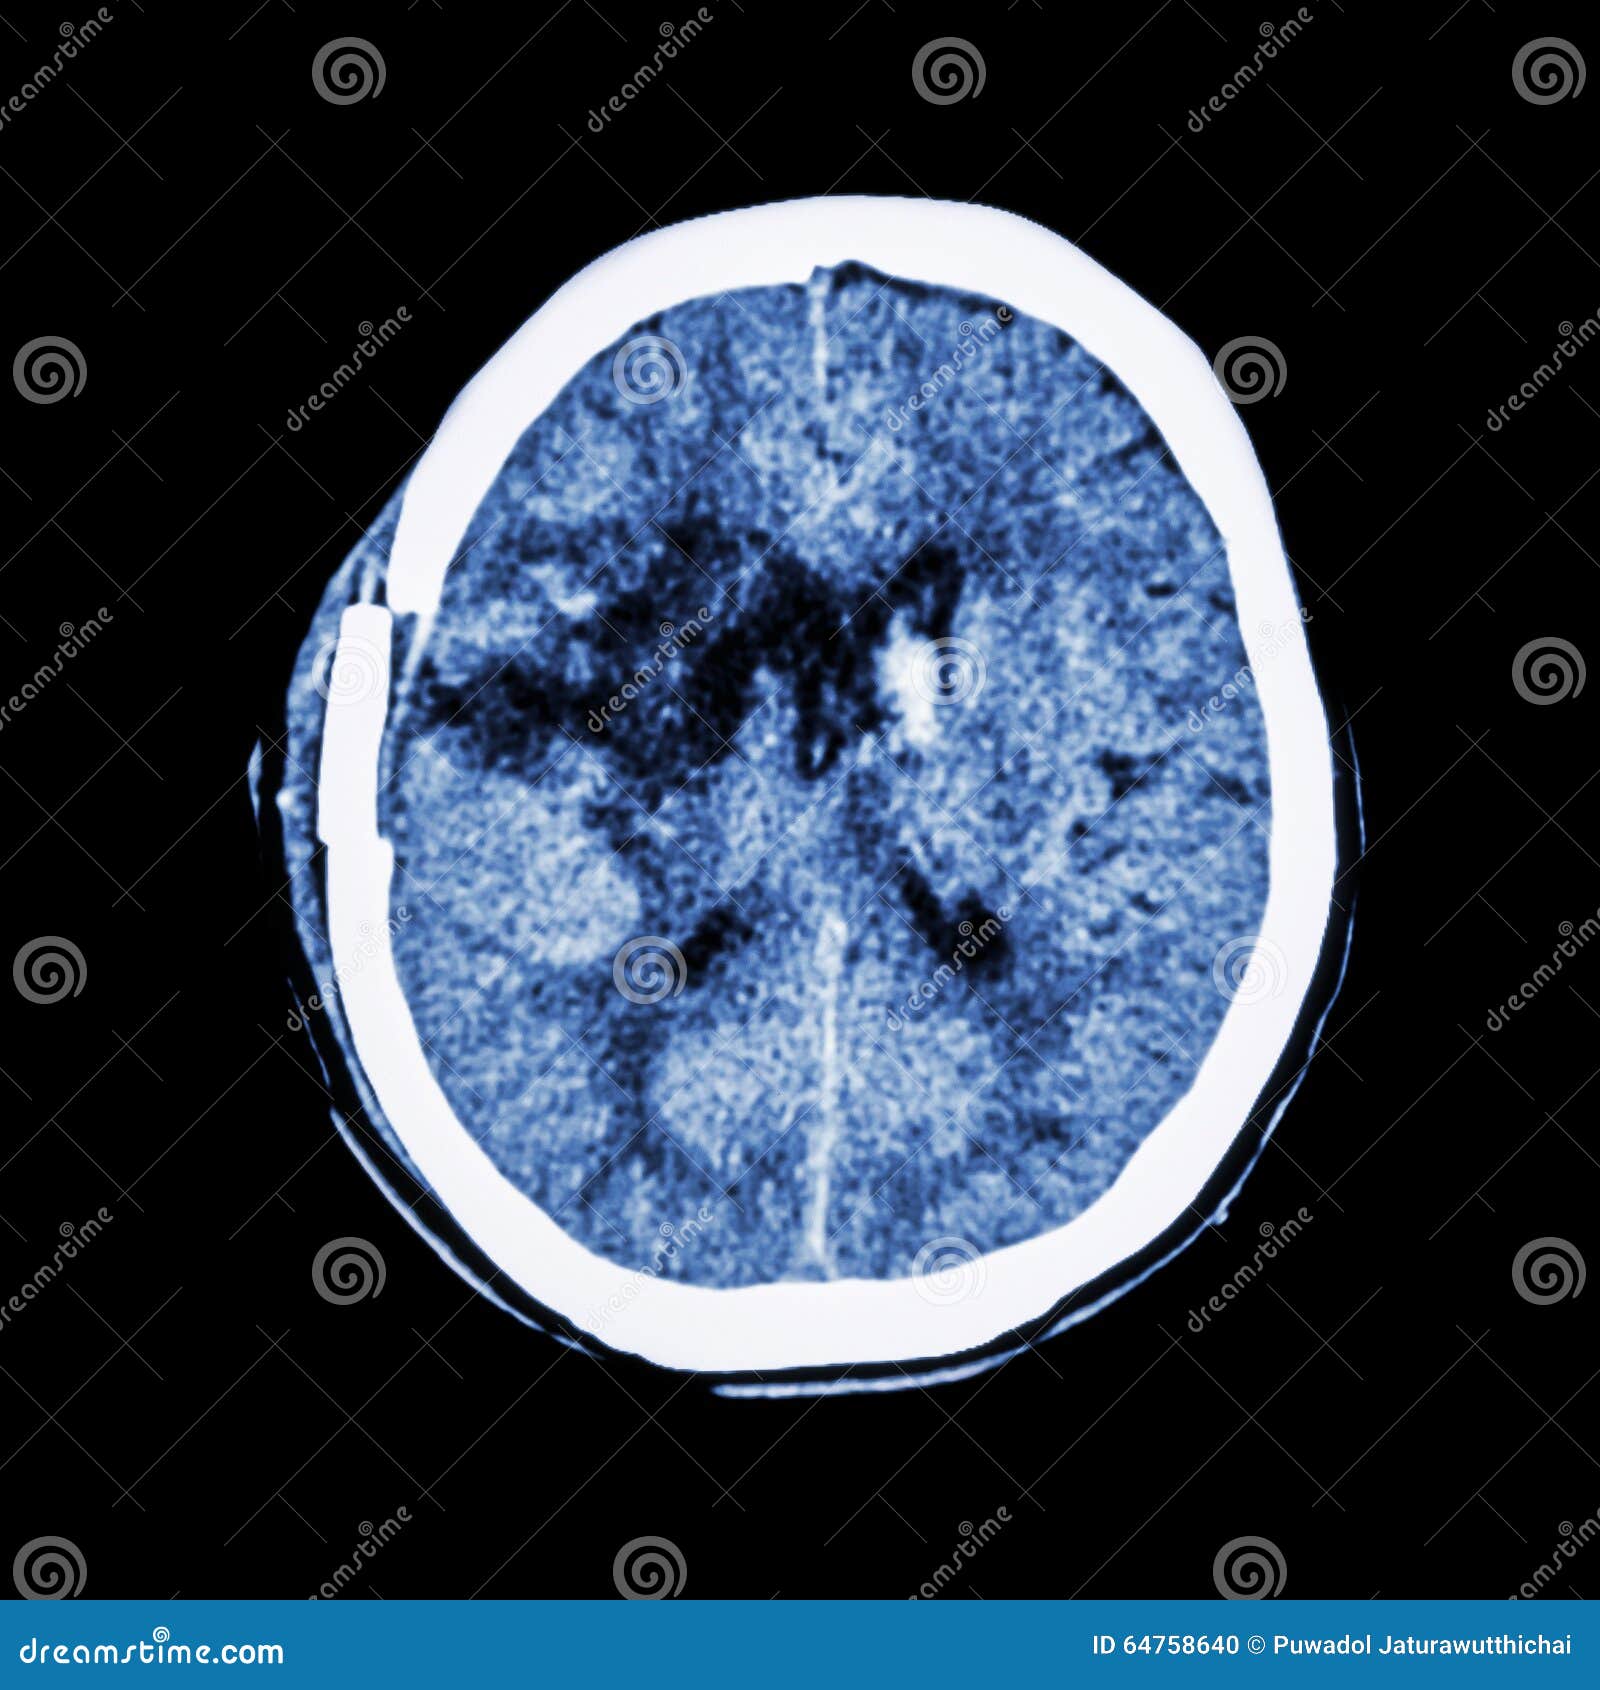 old right basal ganglia hemorrhage with brain edema ( status post craniotomy ) ( hemorrhagic stroke )